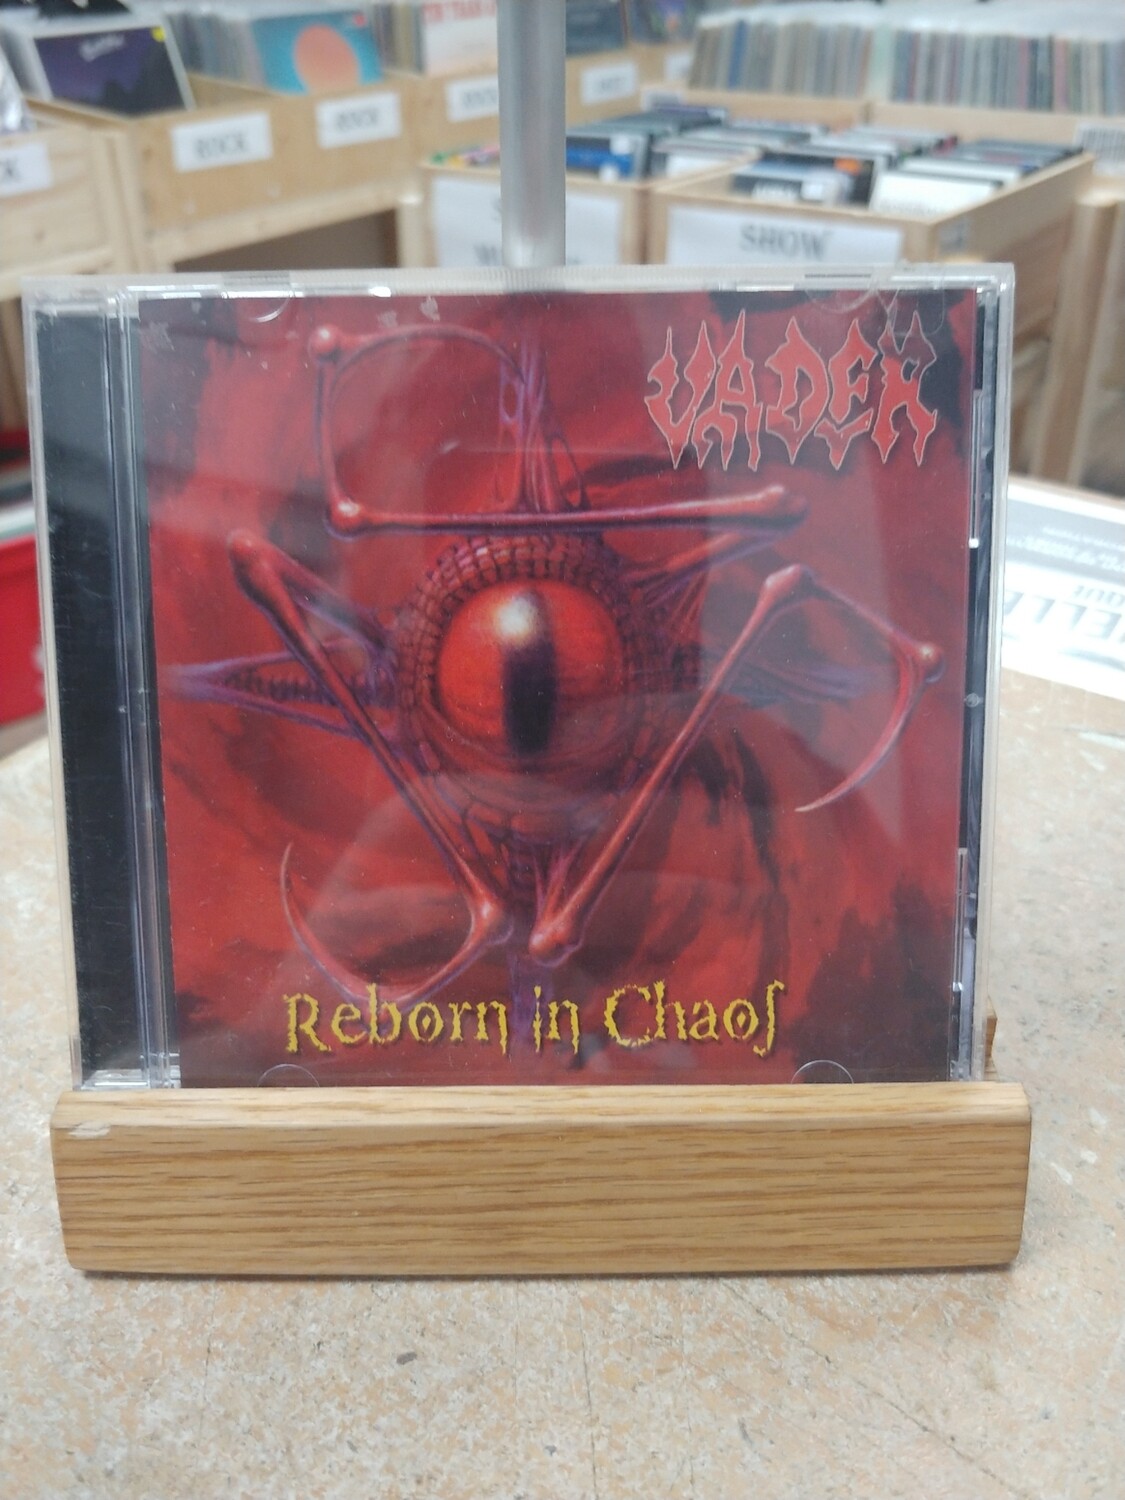 Vader - Reborn in chaos (CD)